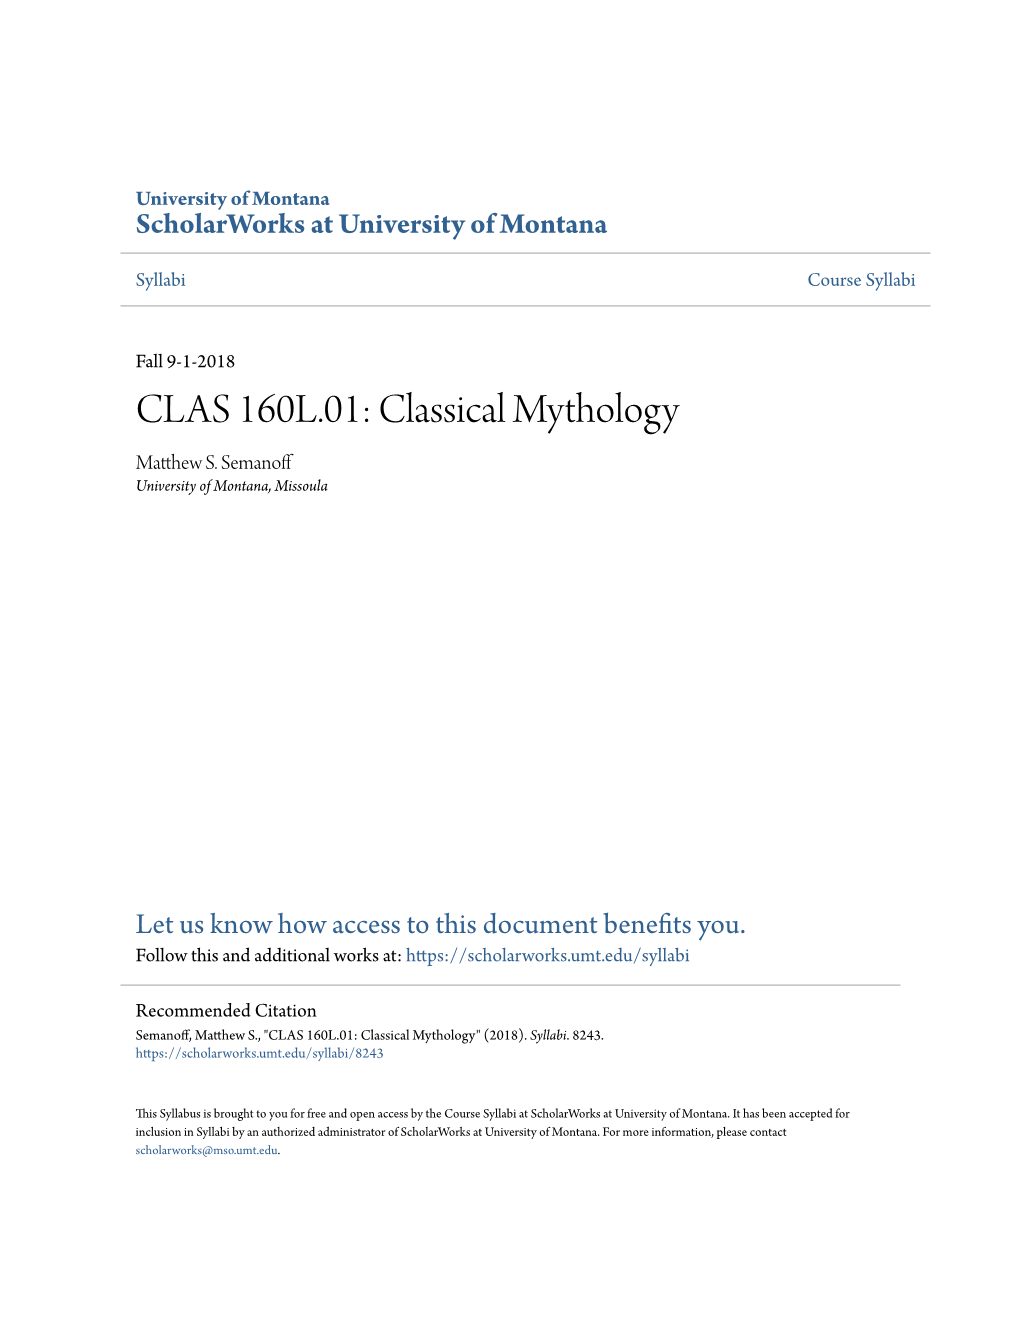 Classical Mythology Matthew .S Semanoff University of Montana, Missoula